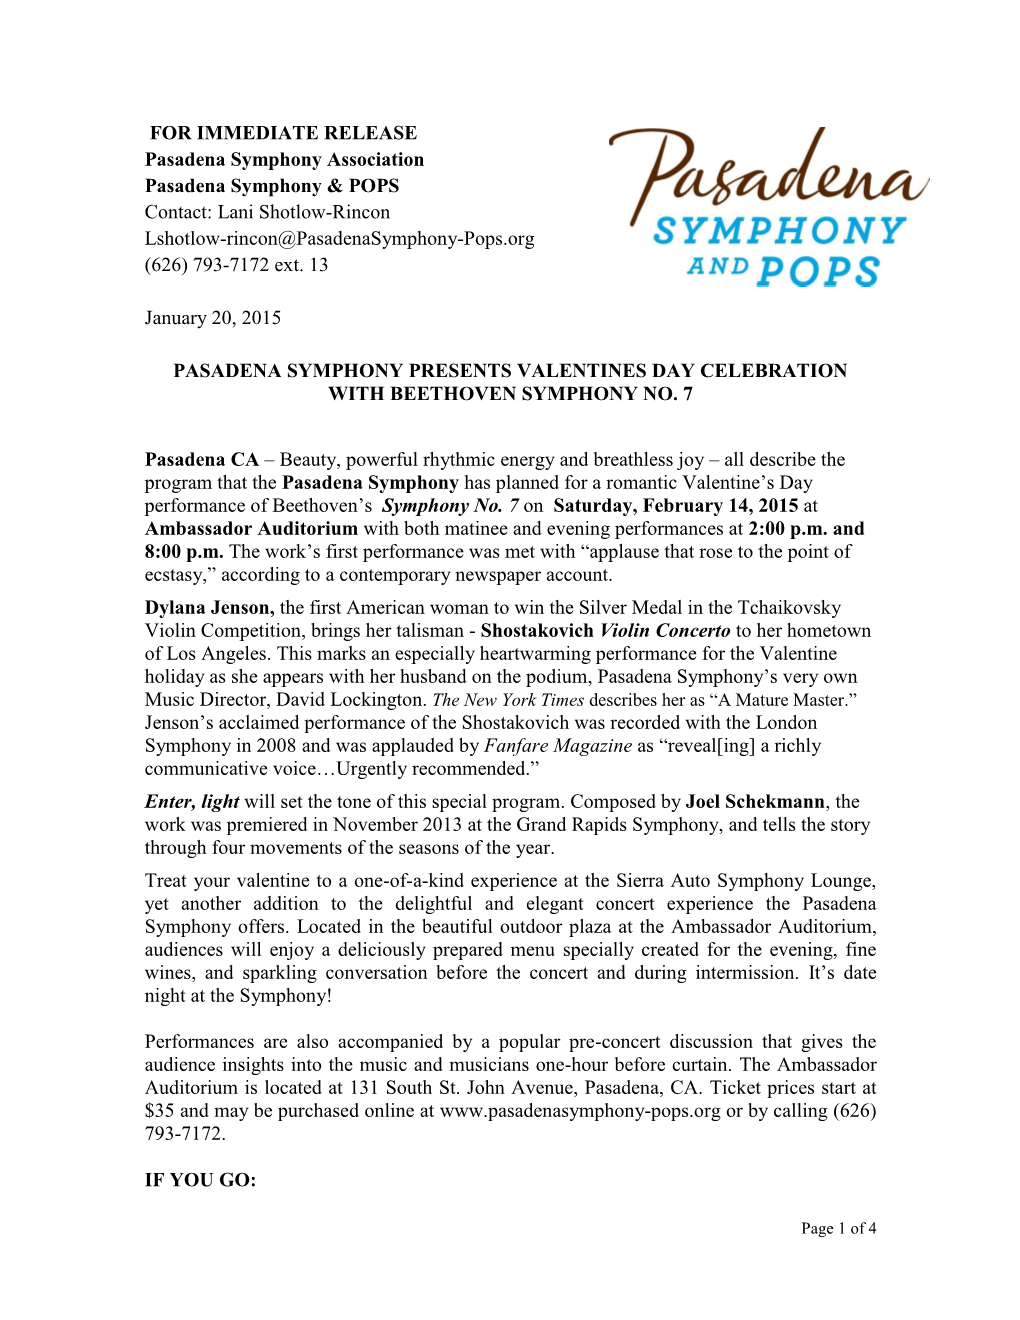 FOR IMMEDIATE RELEASE Pasadena Symphony Association Pasadena Symphony & POPS Contact: Lani Shotlow-Rincon Lshotlow-Rincon@Pa